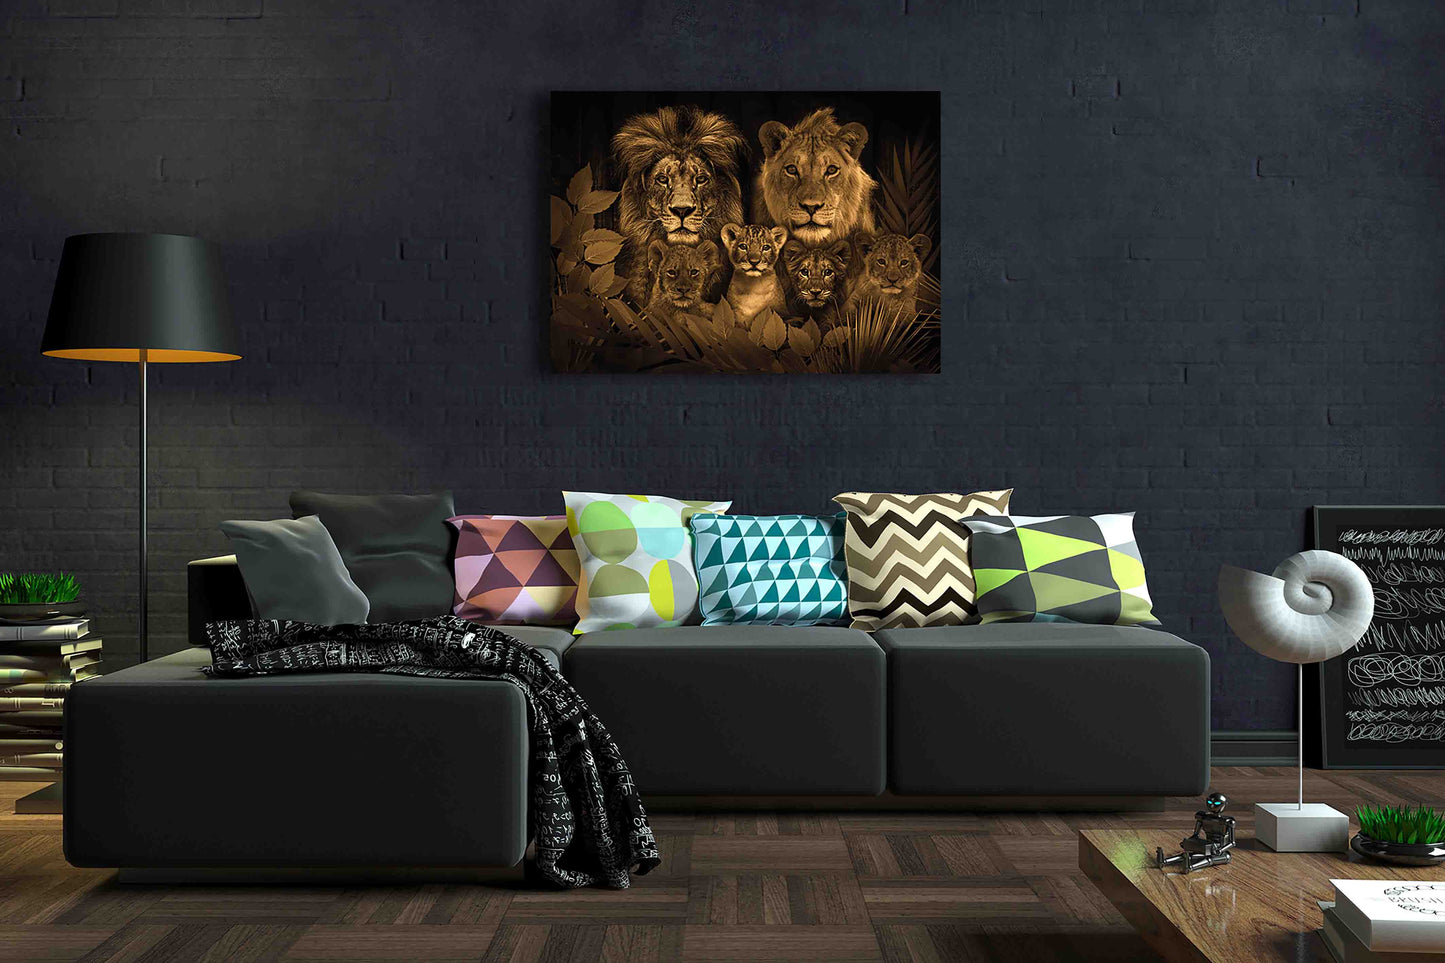 Lion family ( meer welpen)